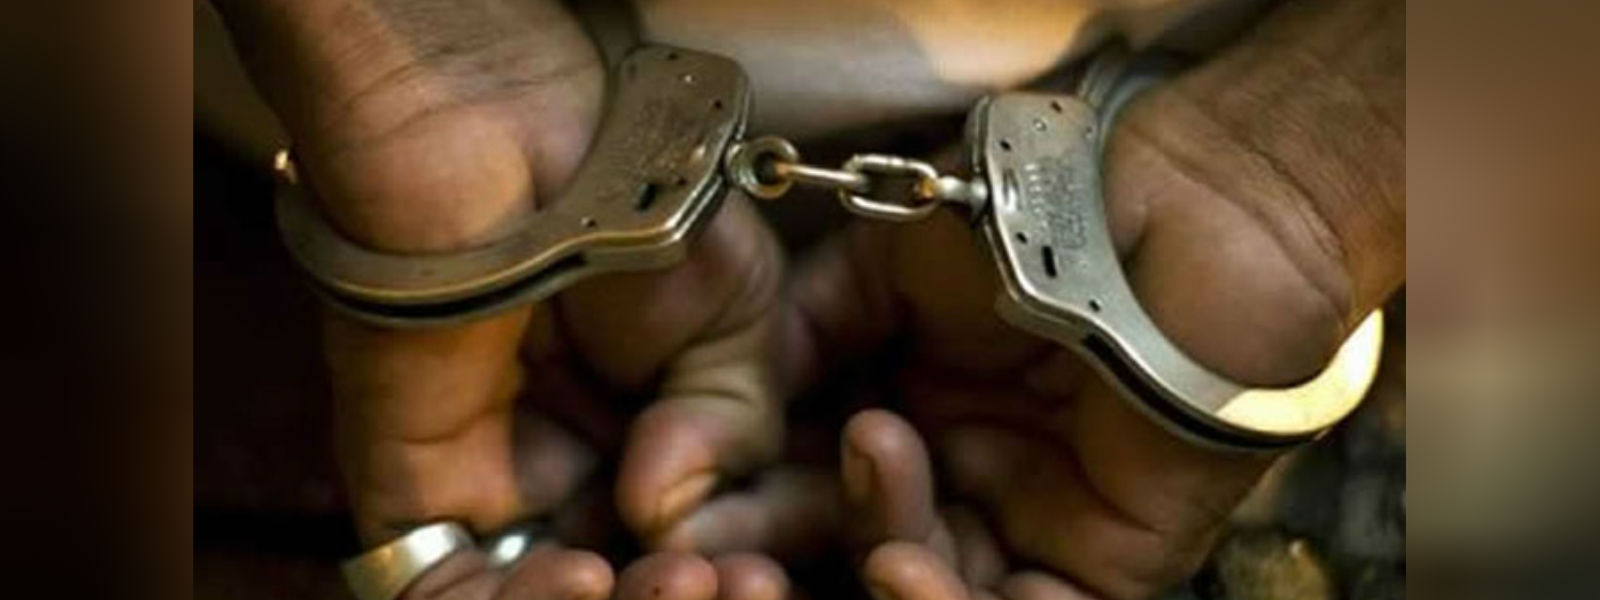 18 suspects arrested in islandwide raids - Police